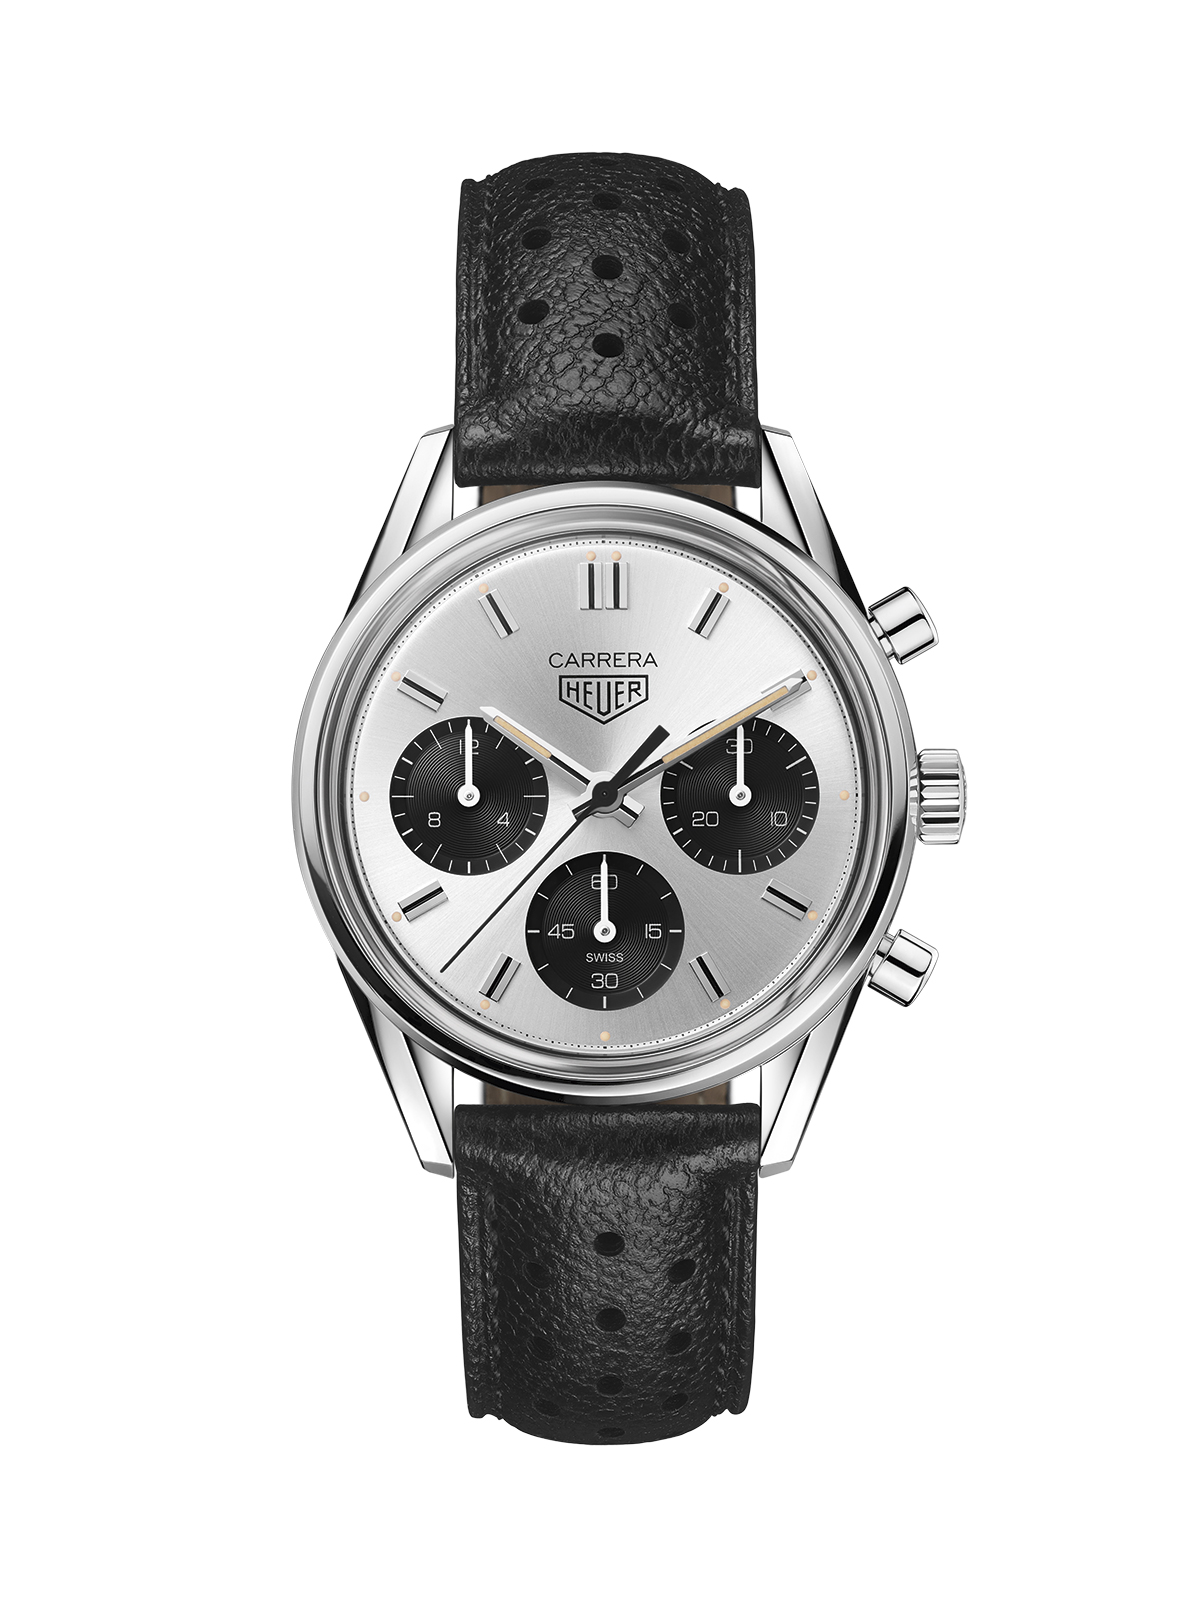 Vintage Watch Models - Tag Heuer Carrera